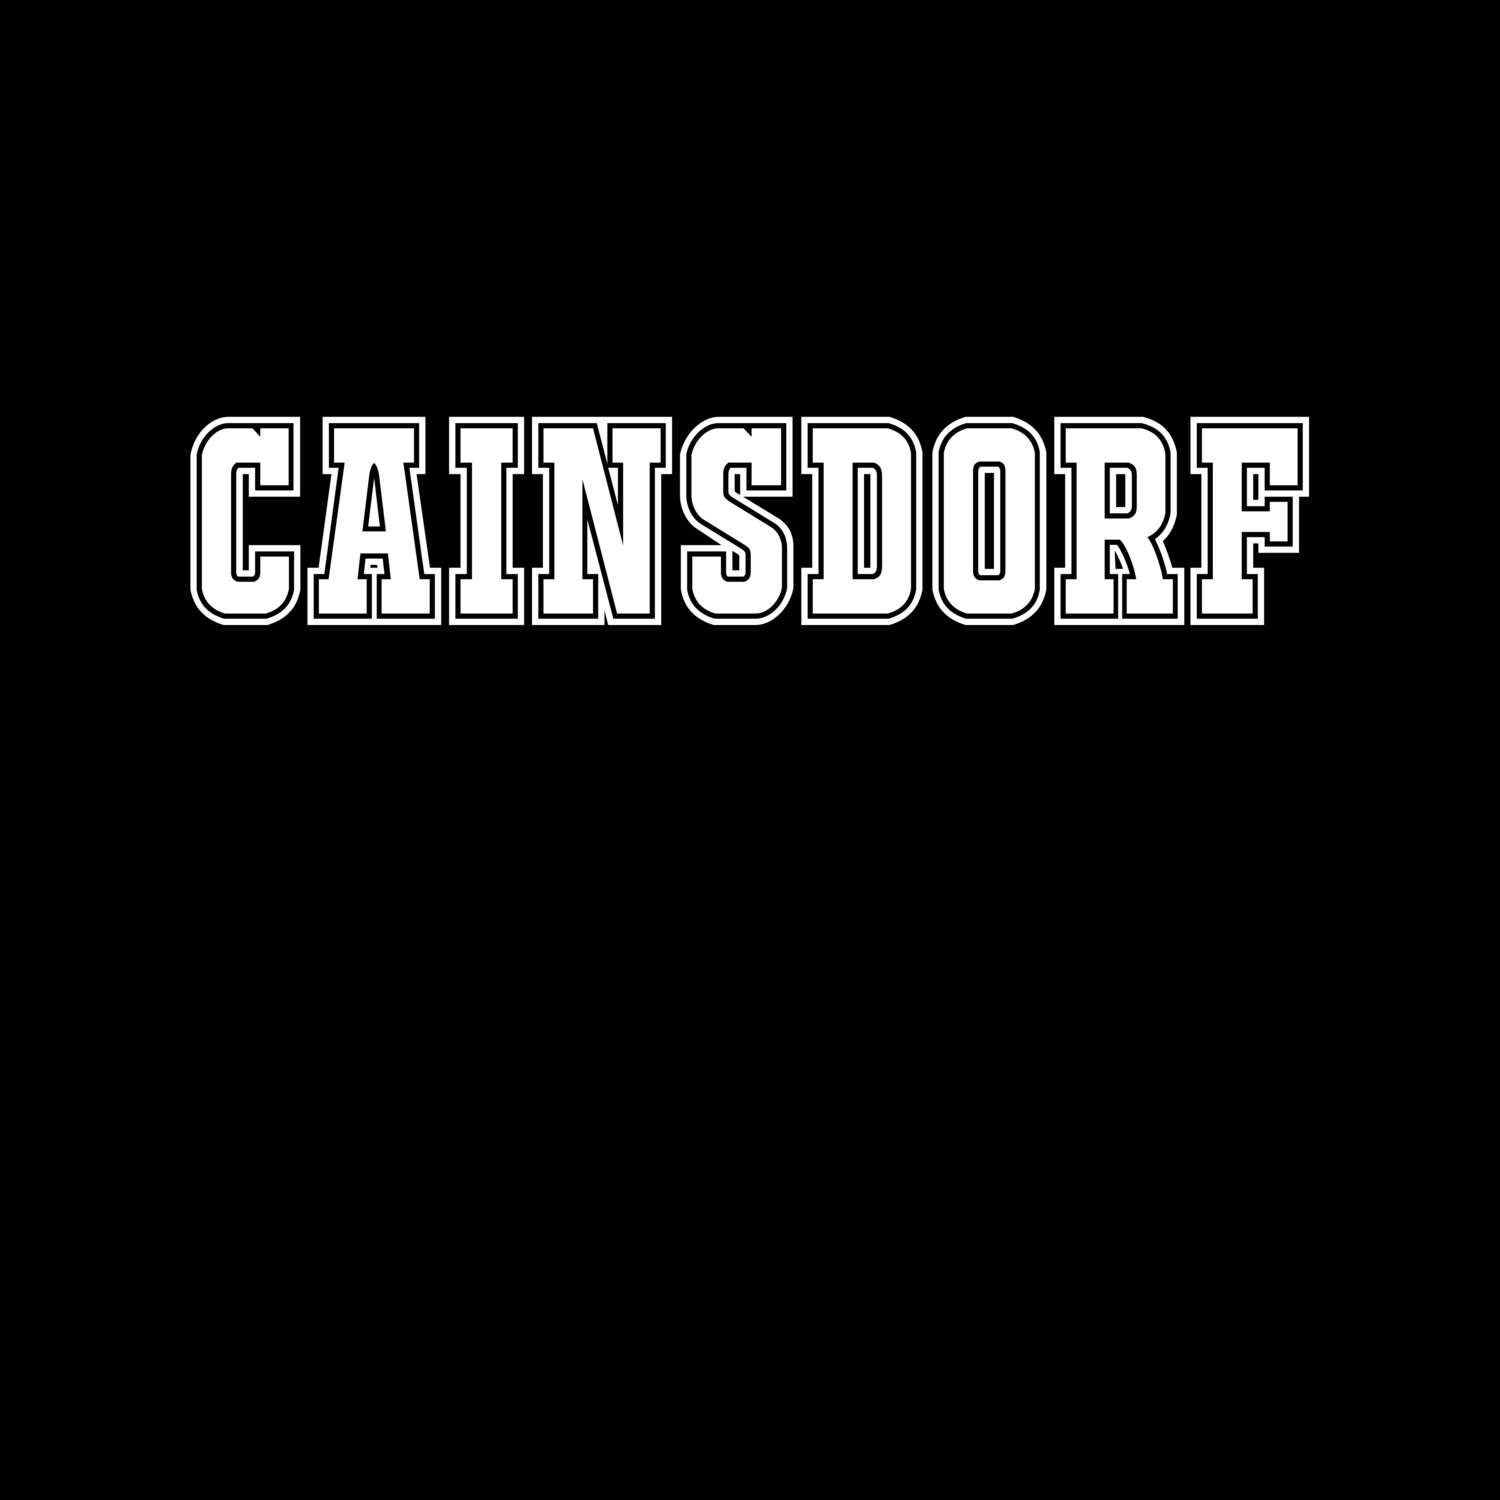 Cainsdorf T-Shirt »Classic«